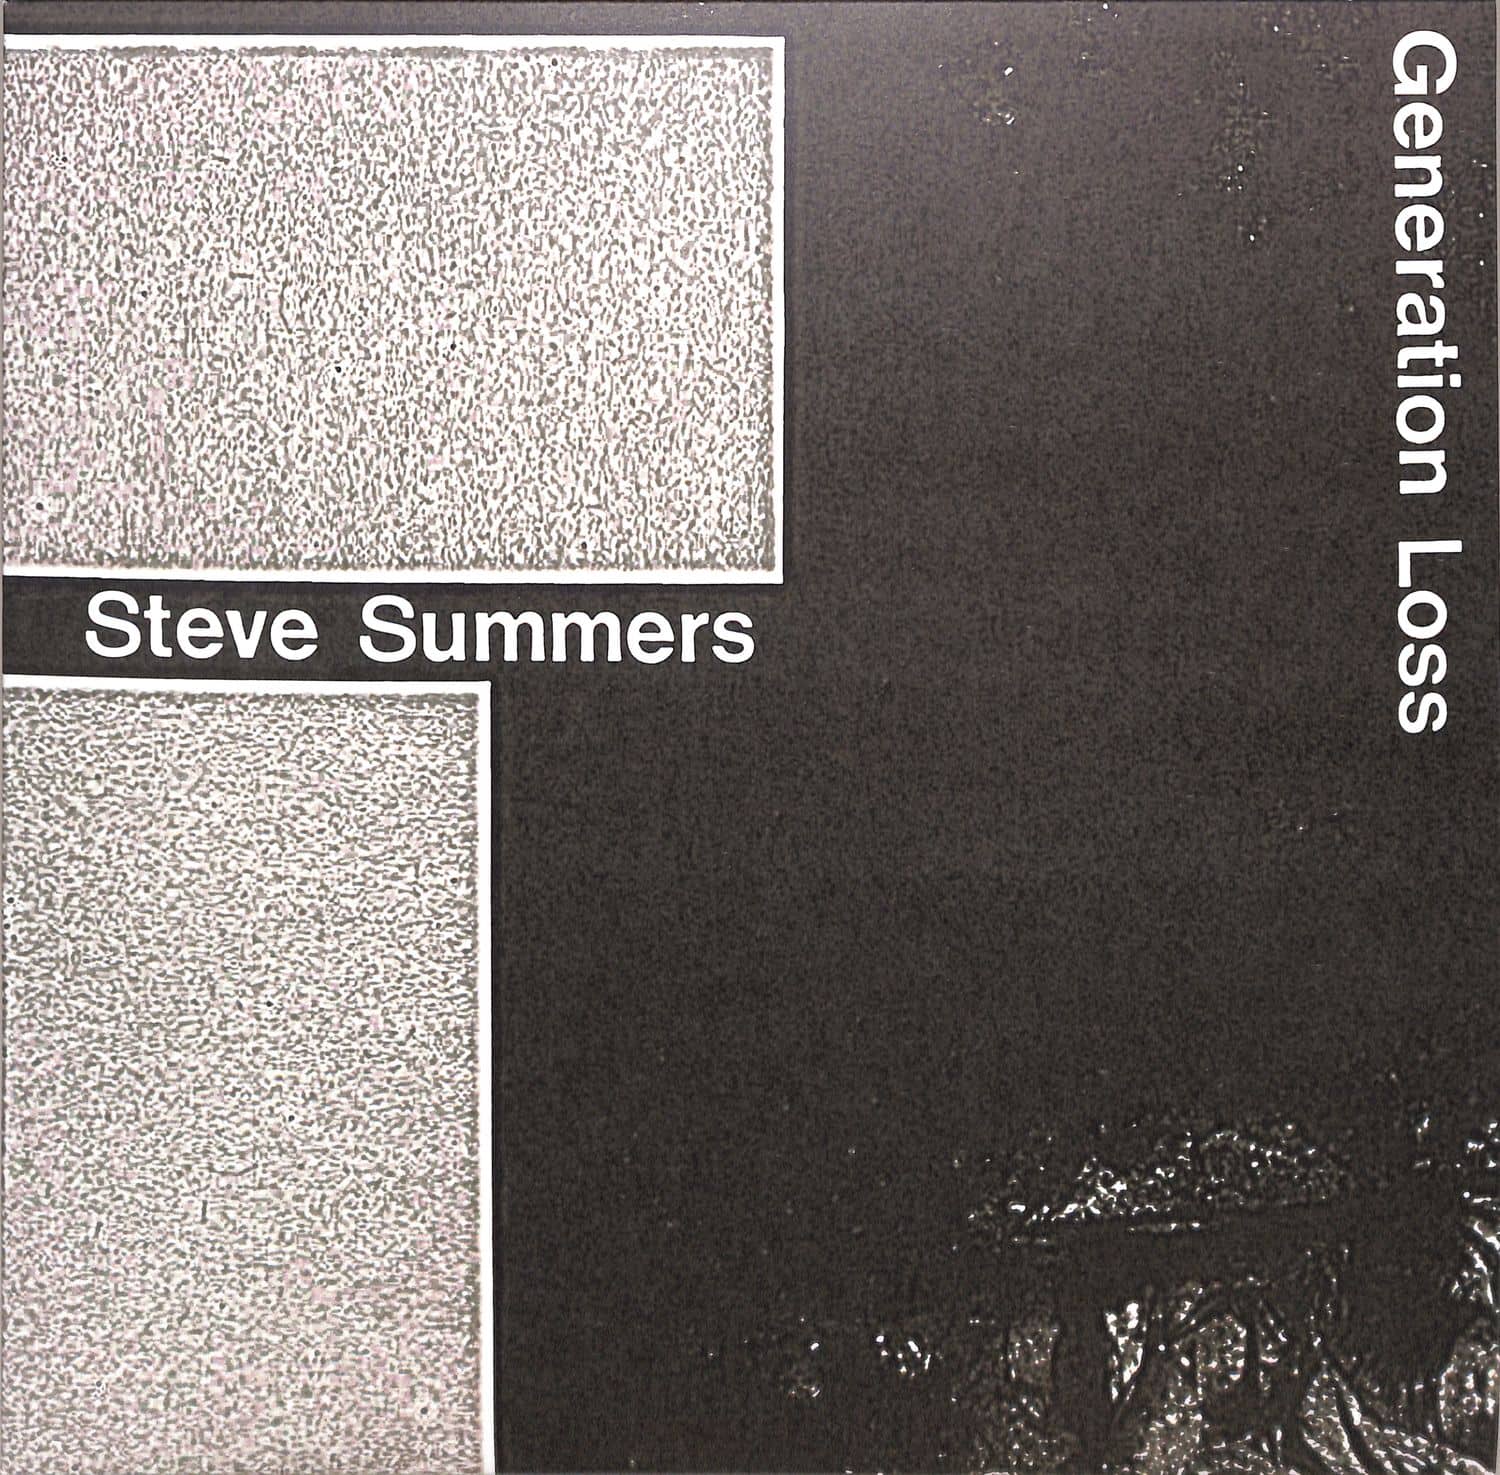 Steve Summers - GENERATION LOSS 